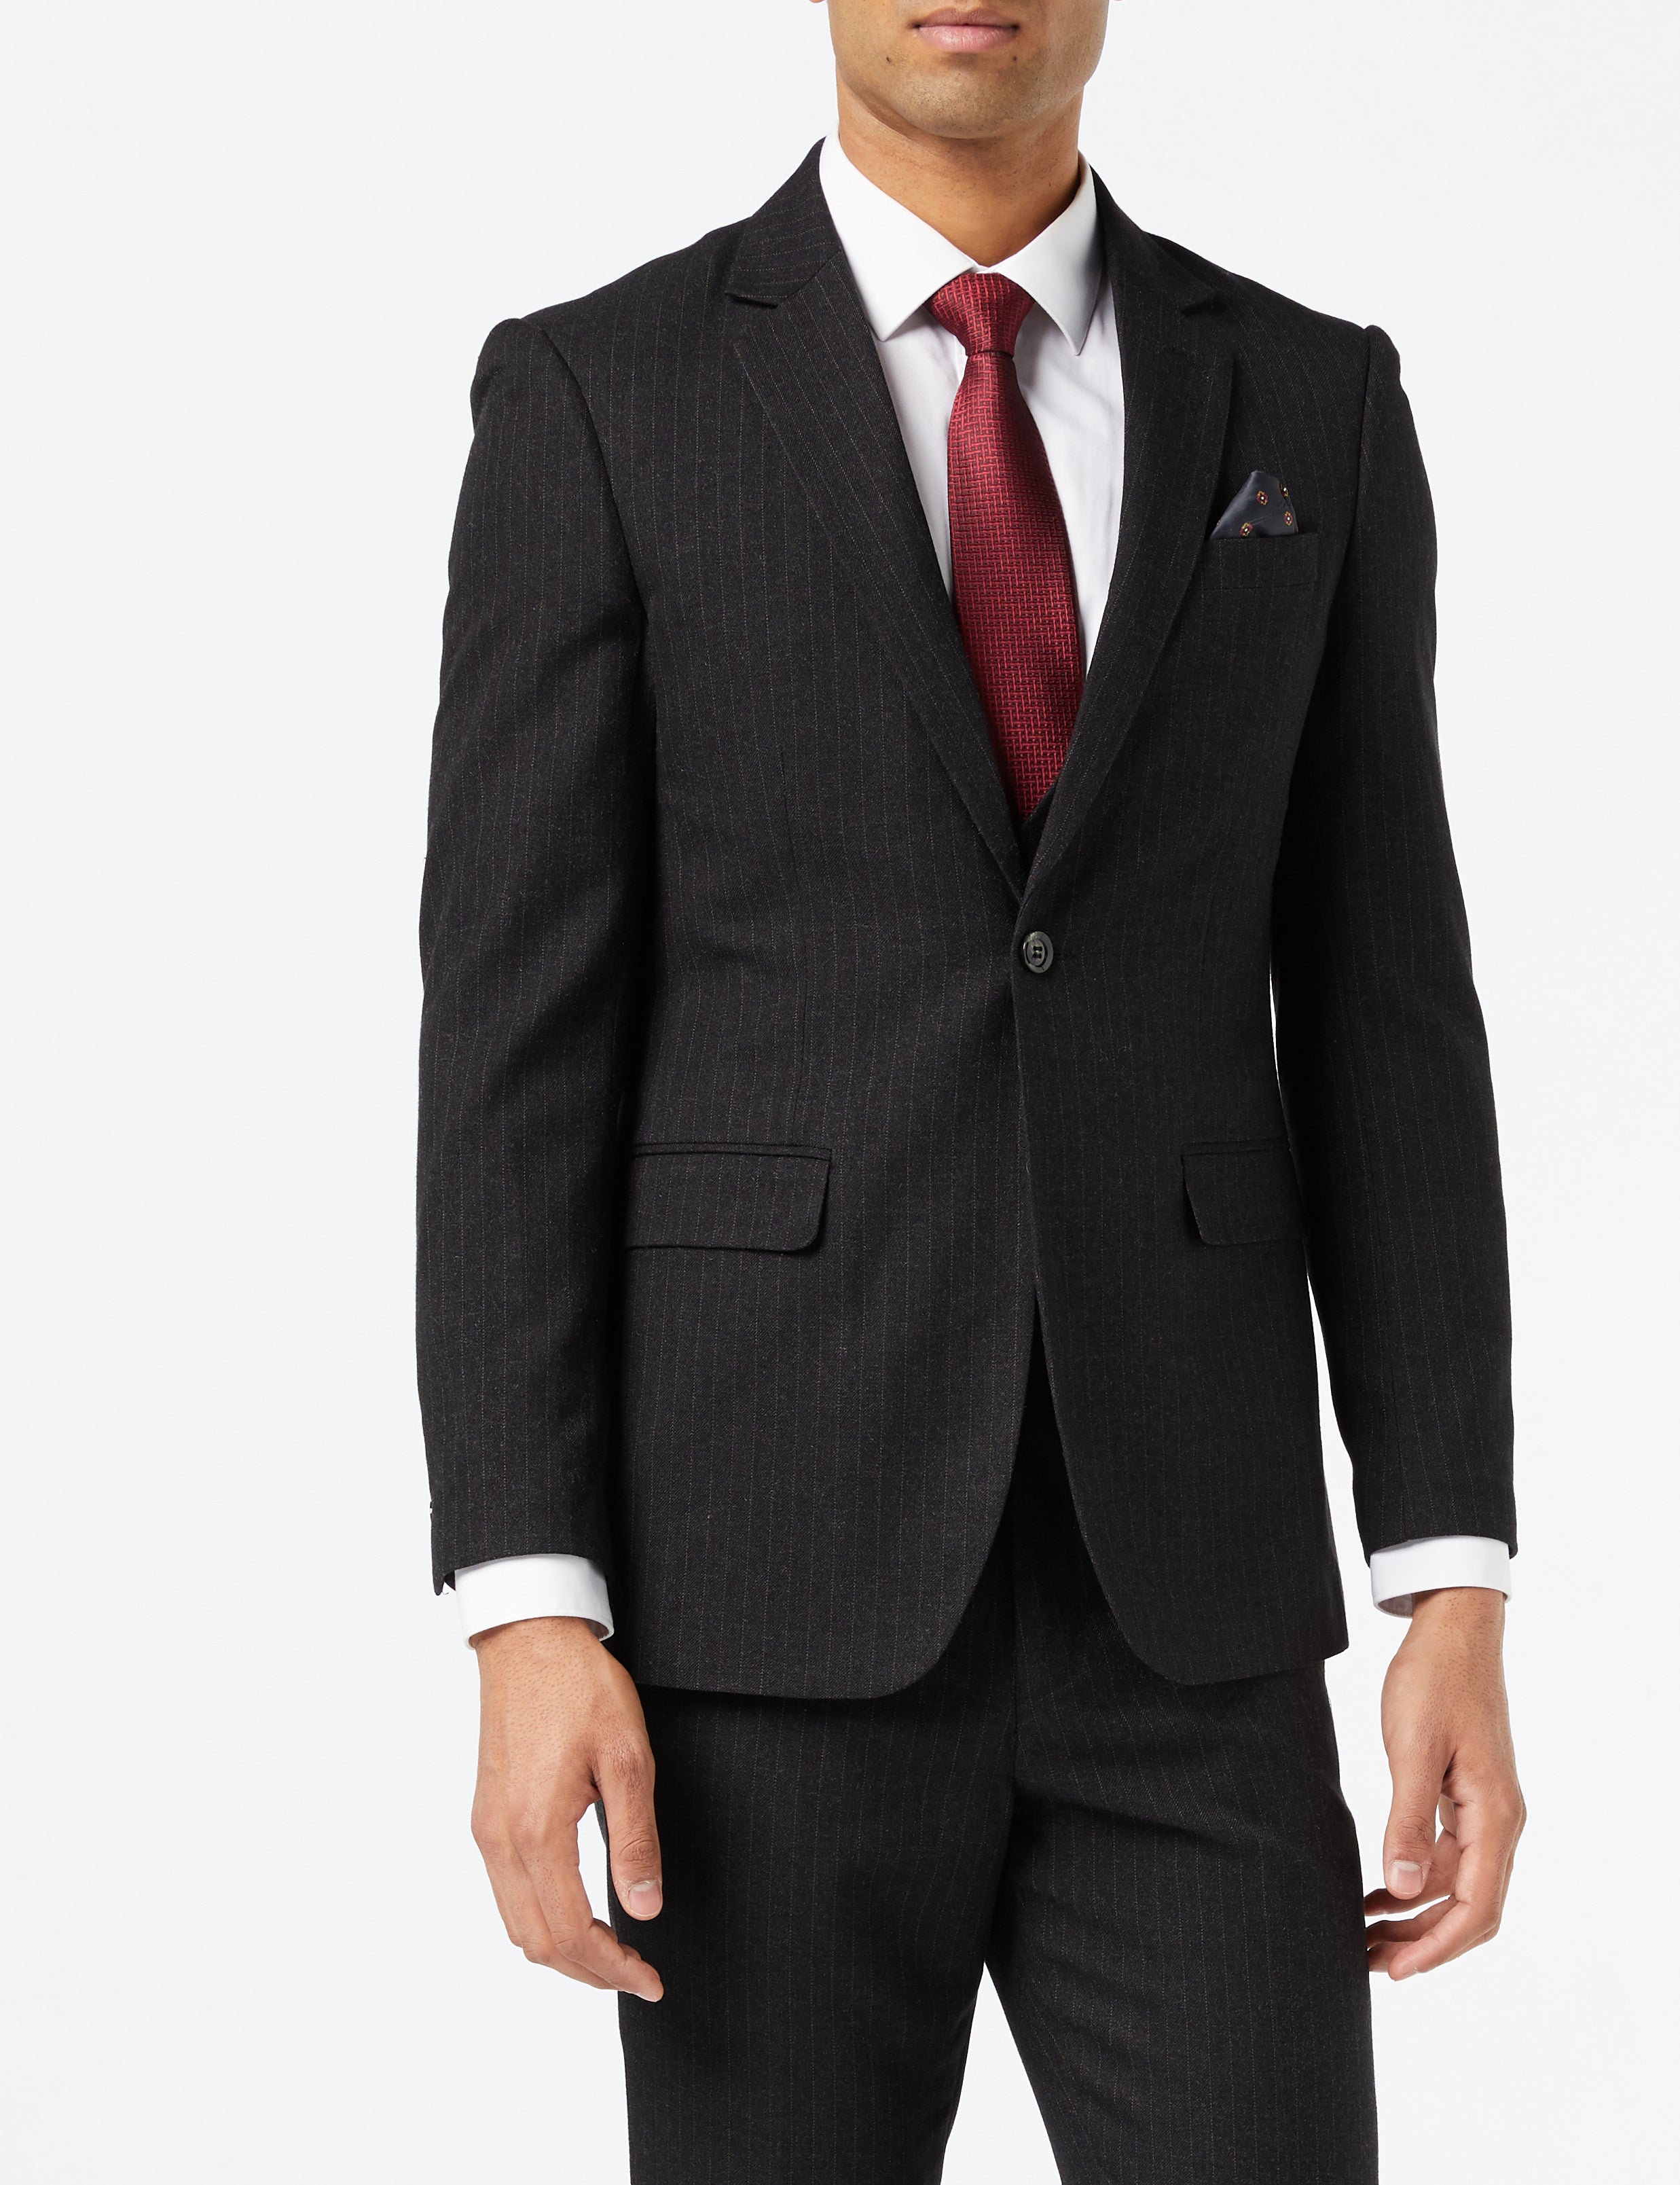 Grey Pinstripe Suit